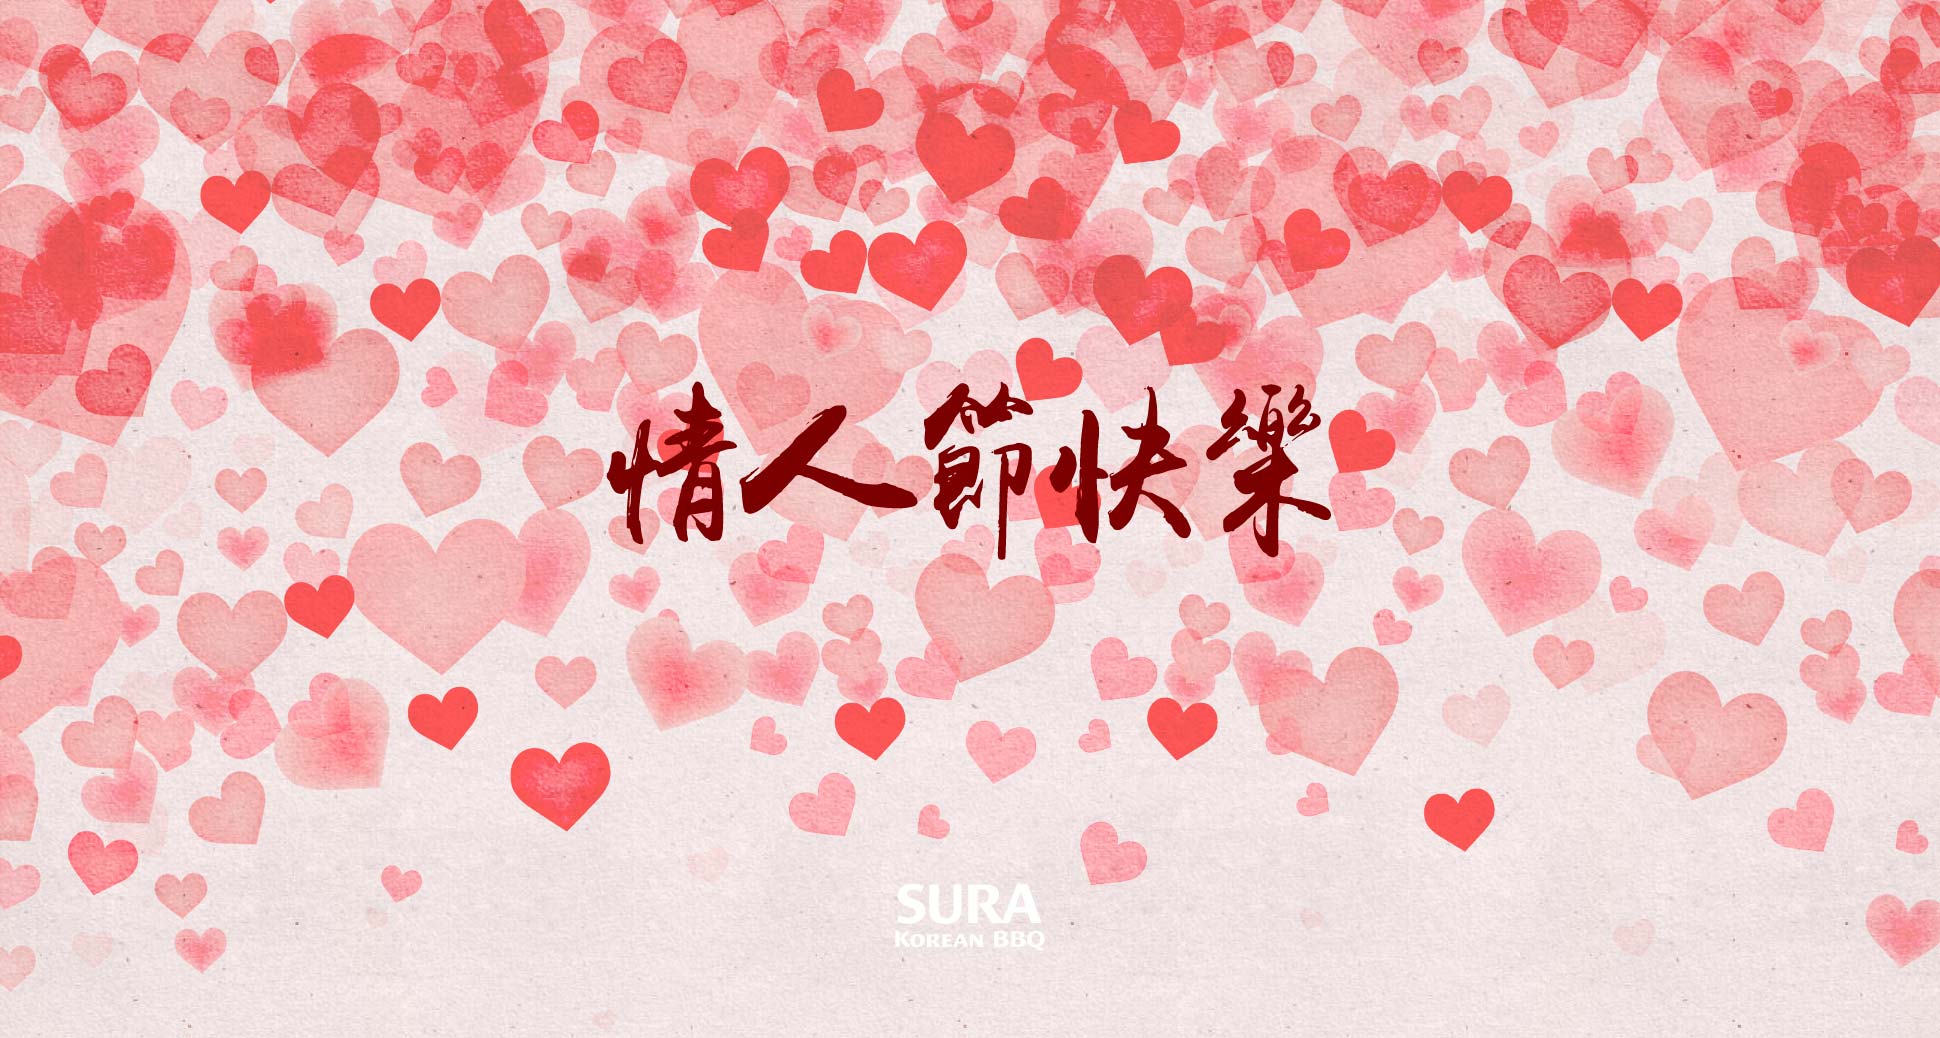 Happy valentine’s day with sura korean bbq